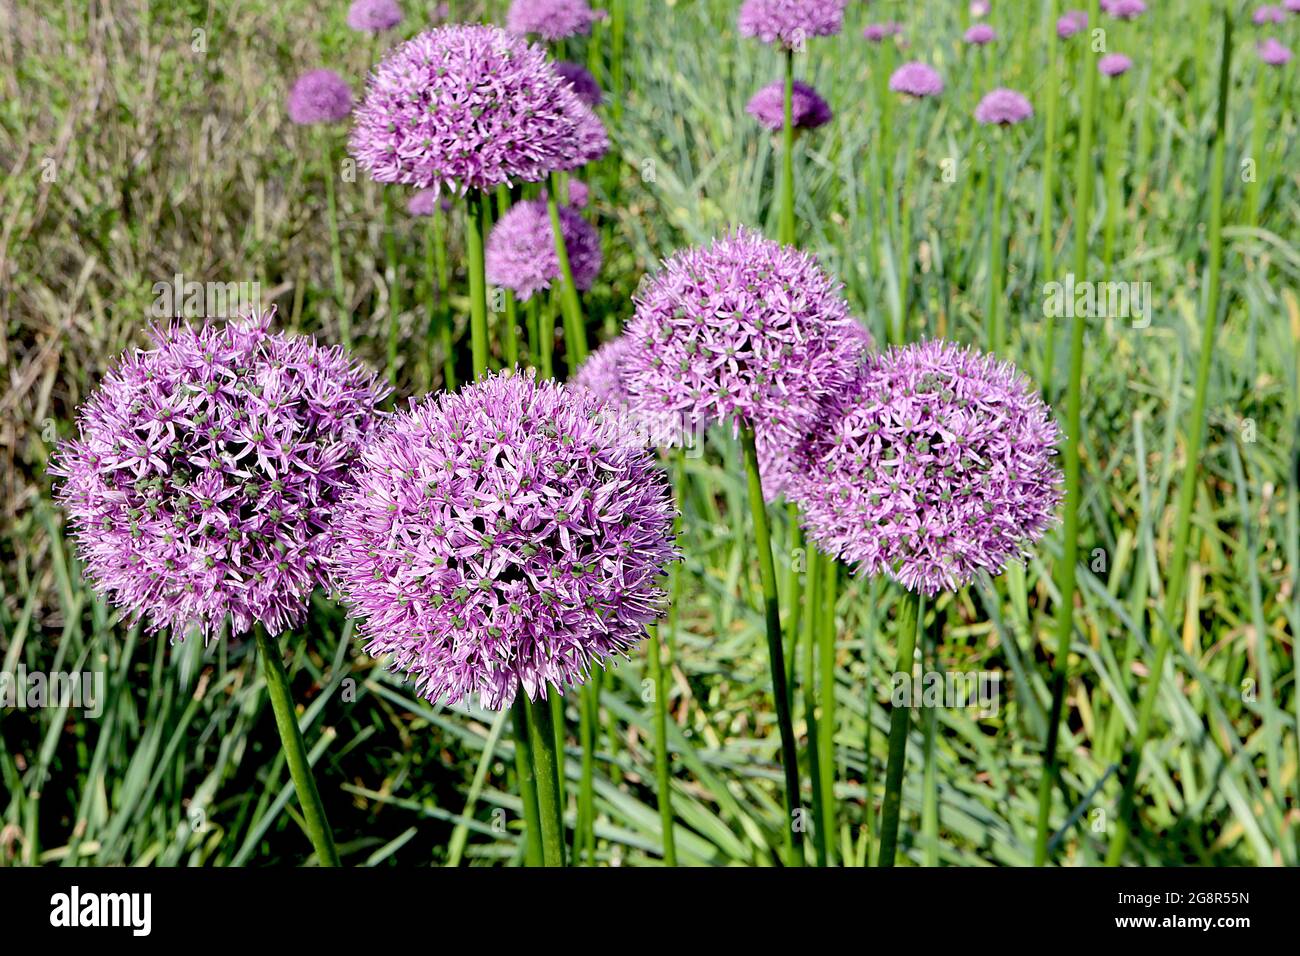 Allium ‘Gladiator’ Spherical umbel of violet rose star-shaped flowers, tall stems,  May, England, UK Stock Photo